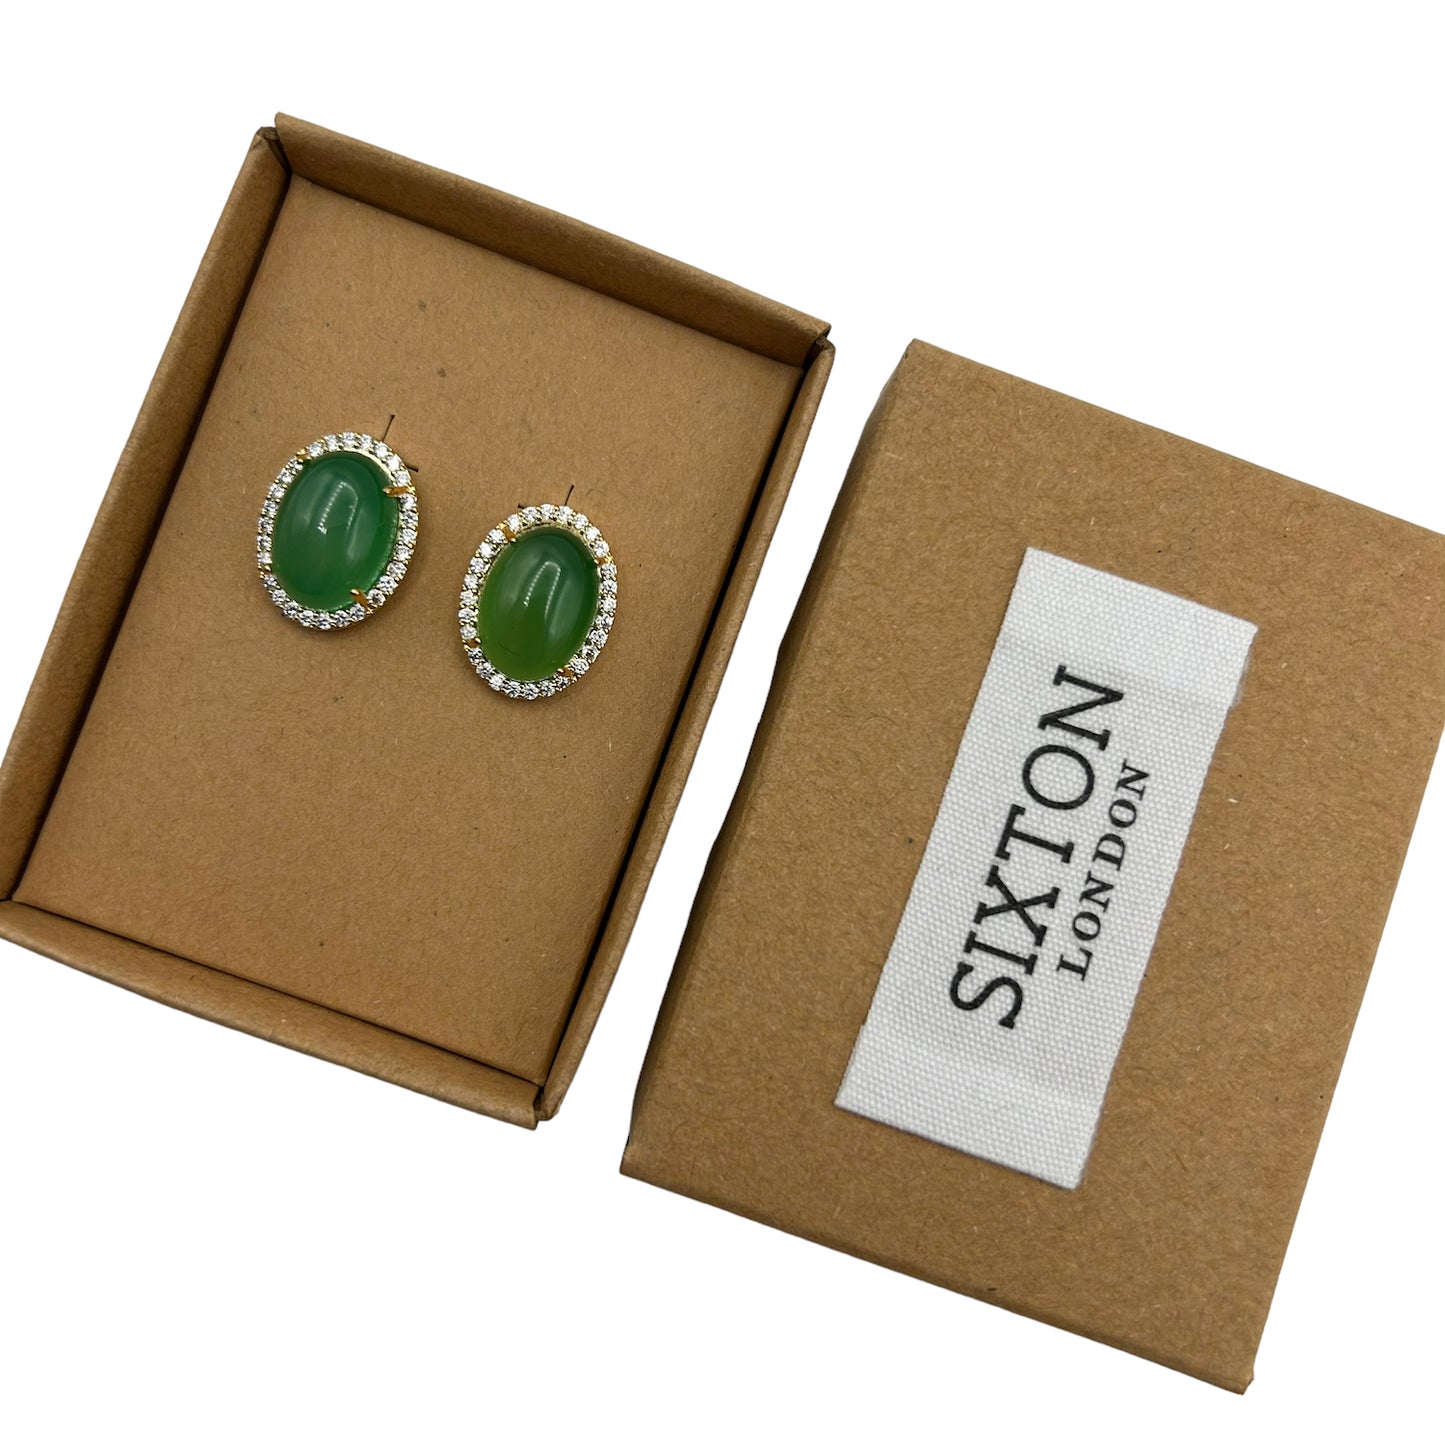 Retro jade style earrings